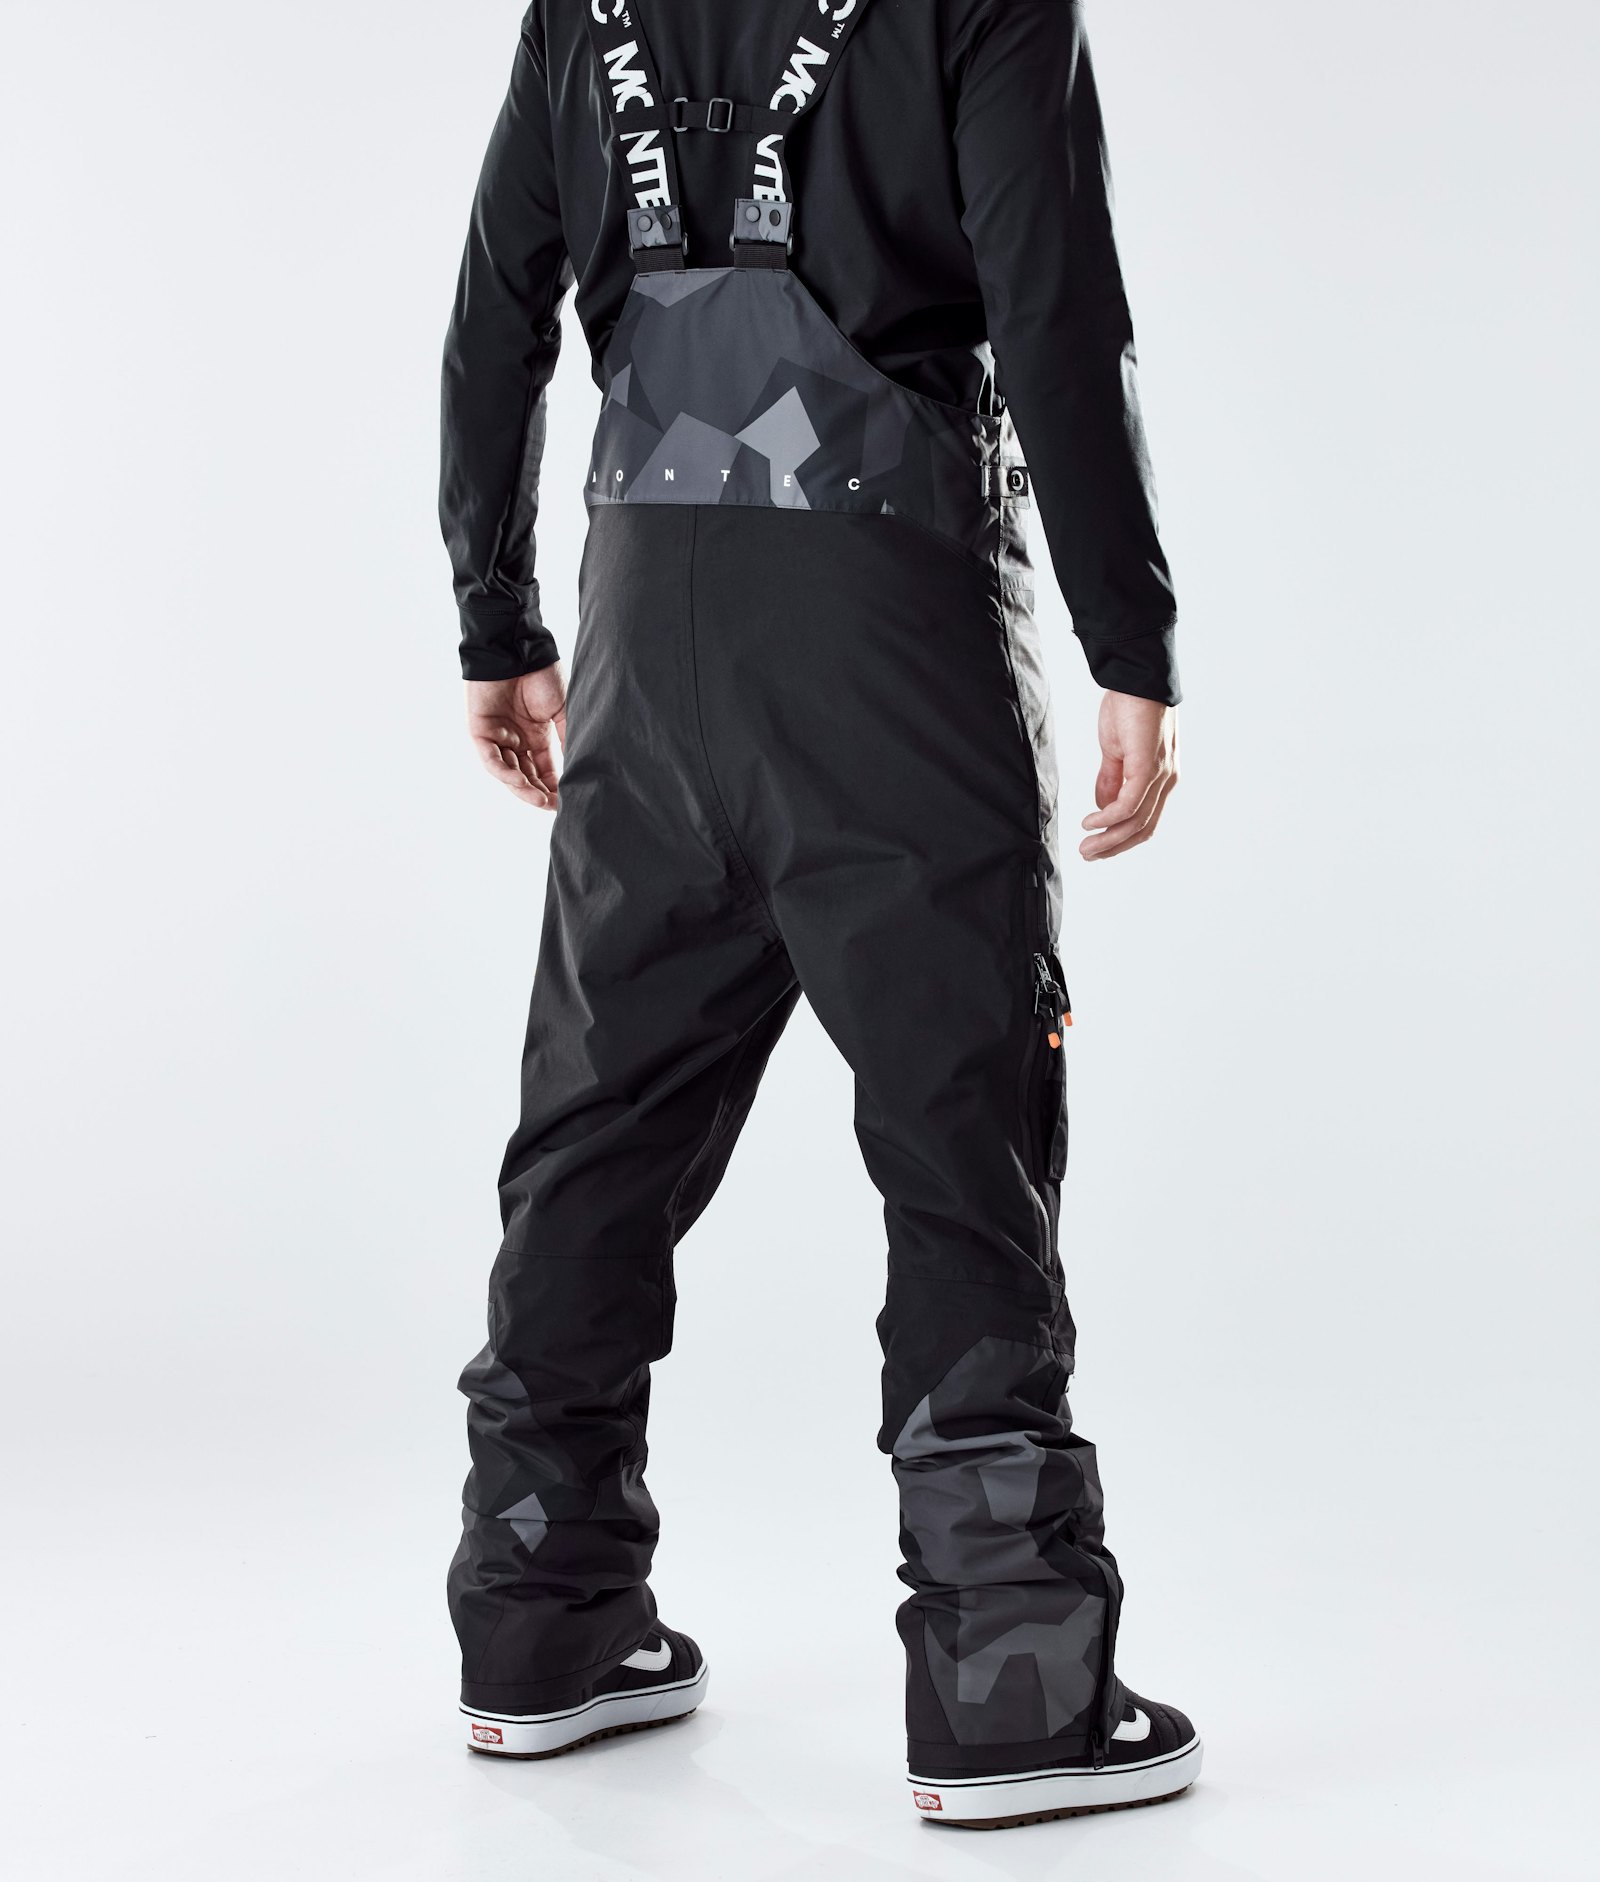 Fawk 2020 Snowboard Bukser Herre Night Camo/Black